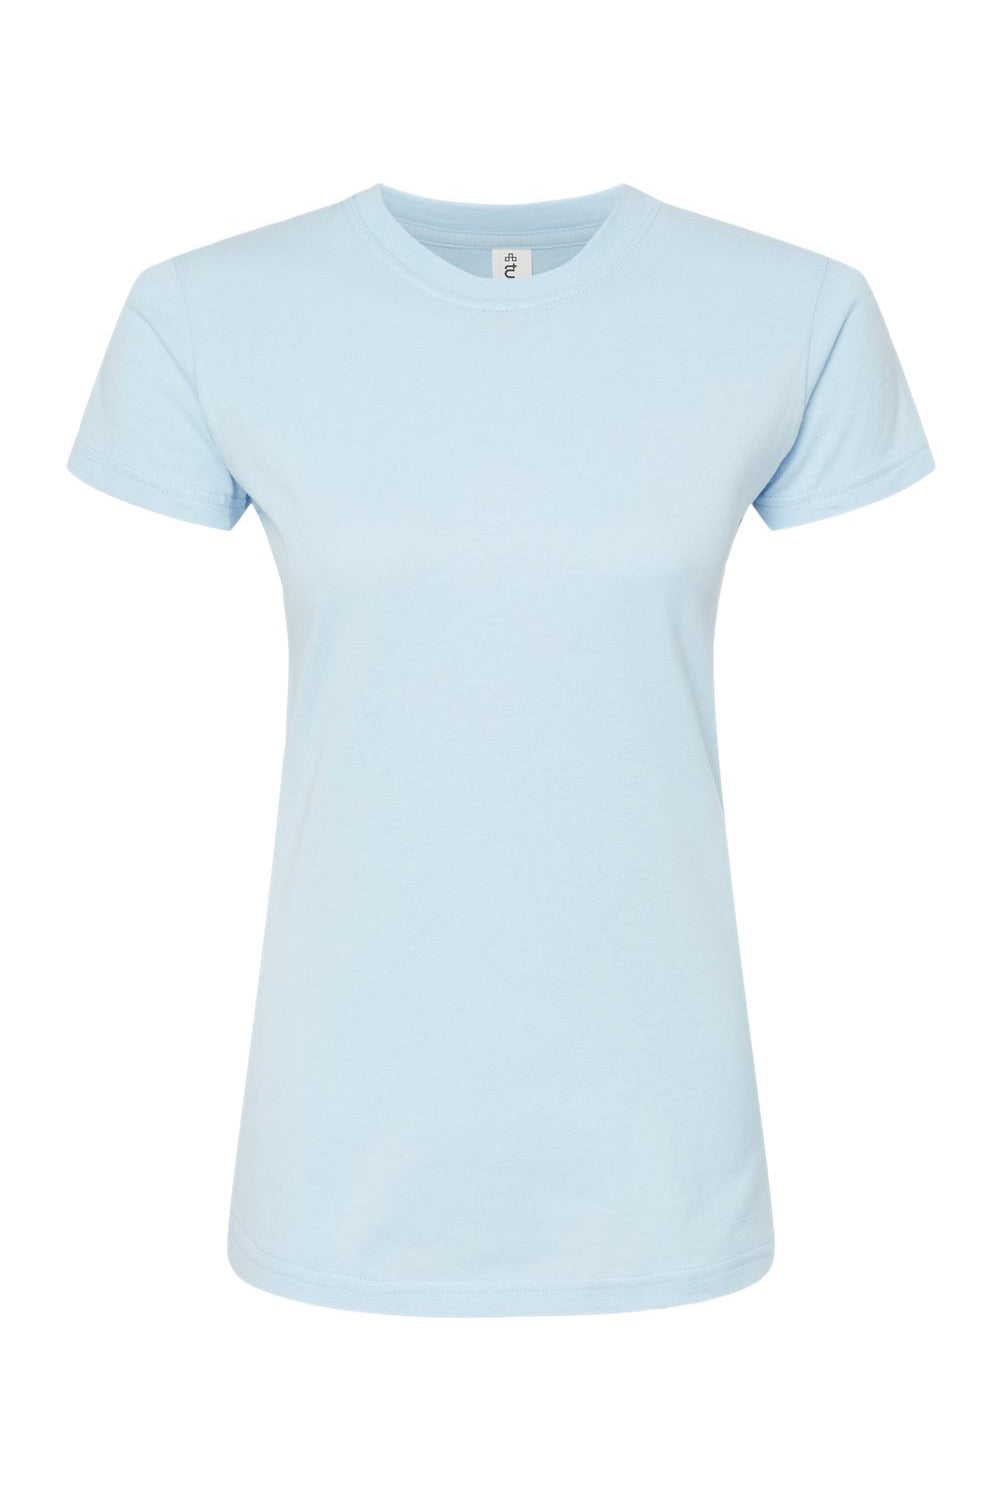 Tultex 213 Womens Fine Jersey Slim Fit Short Sleeve Crewneck T-Shirt Baby Blue Flat Front